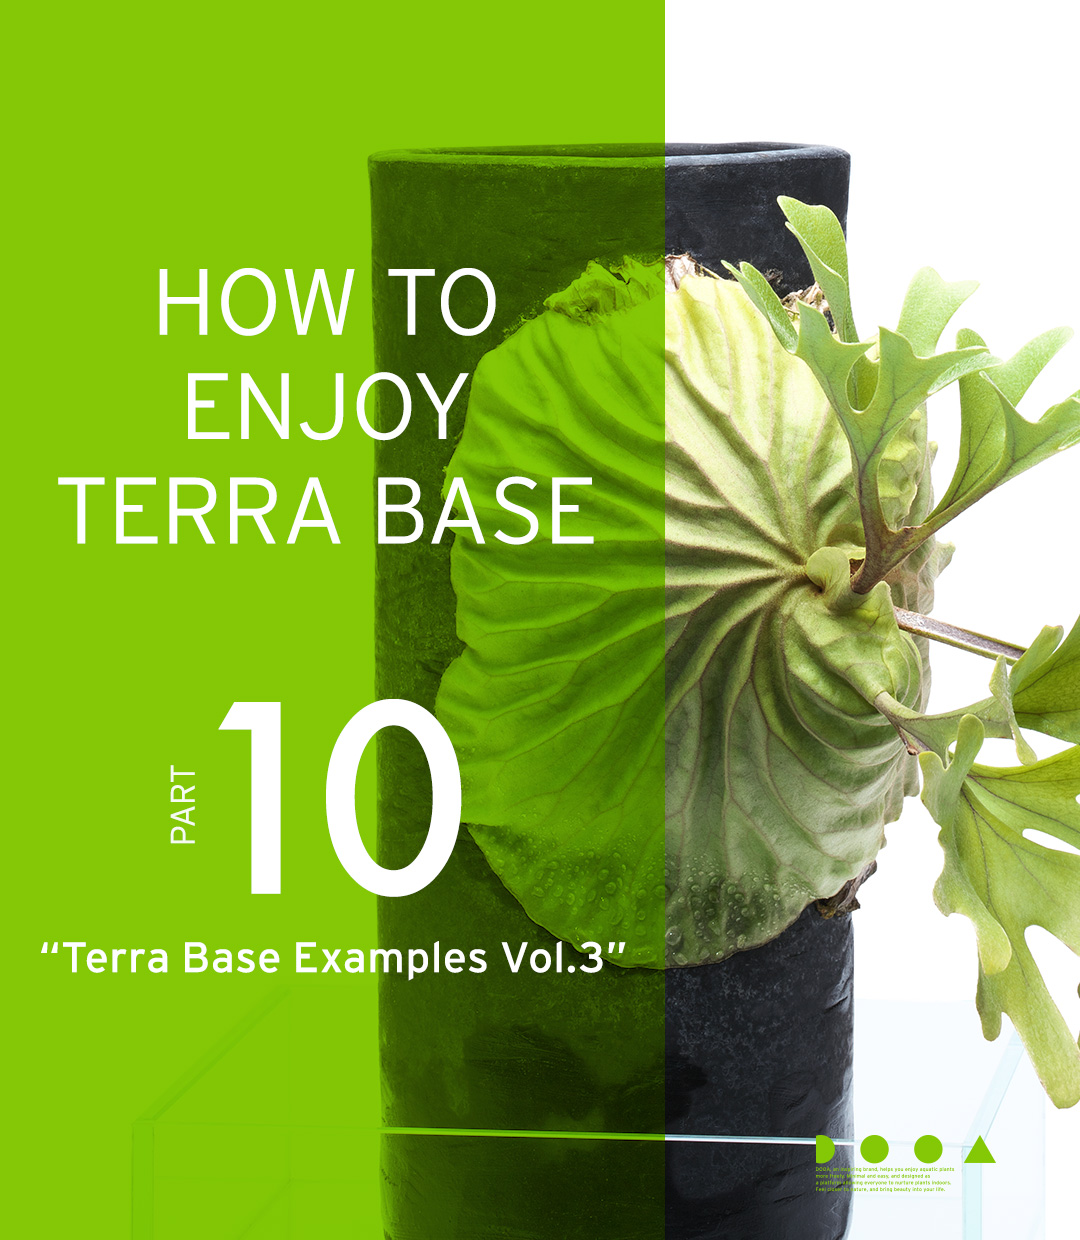 HOW TO ENJOY TERRA BASE “Terra Base Examples Vol.3”